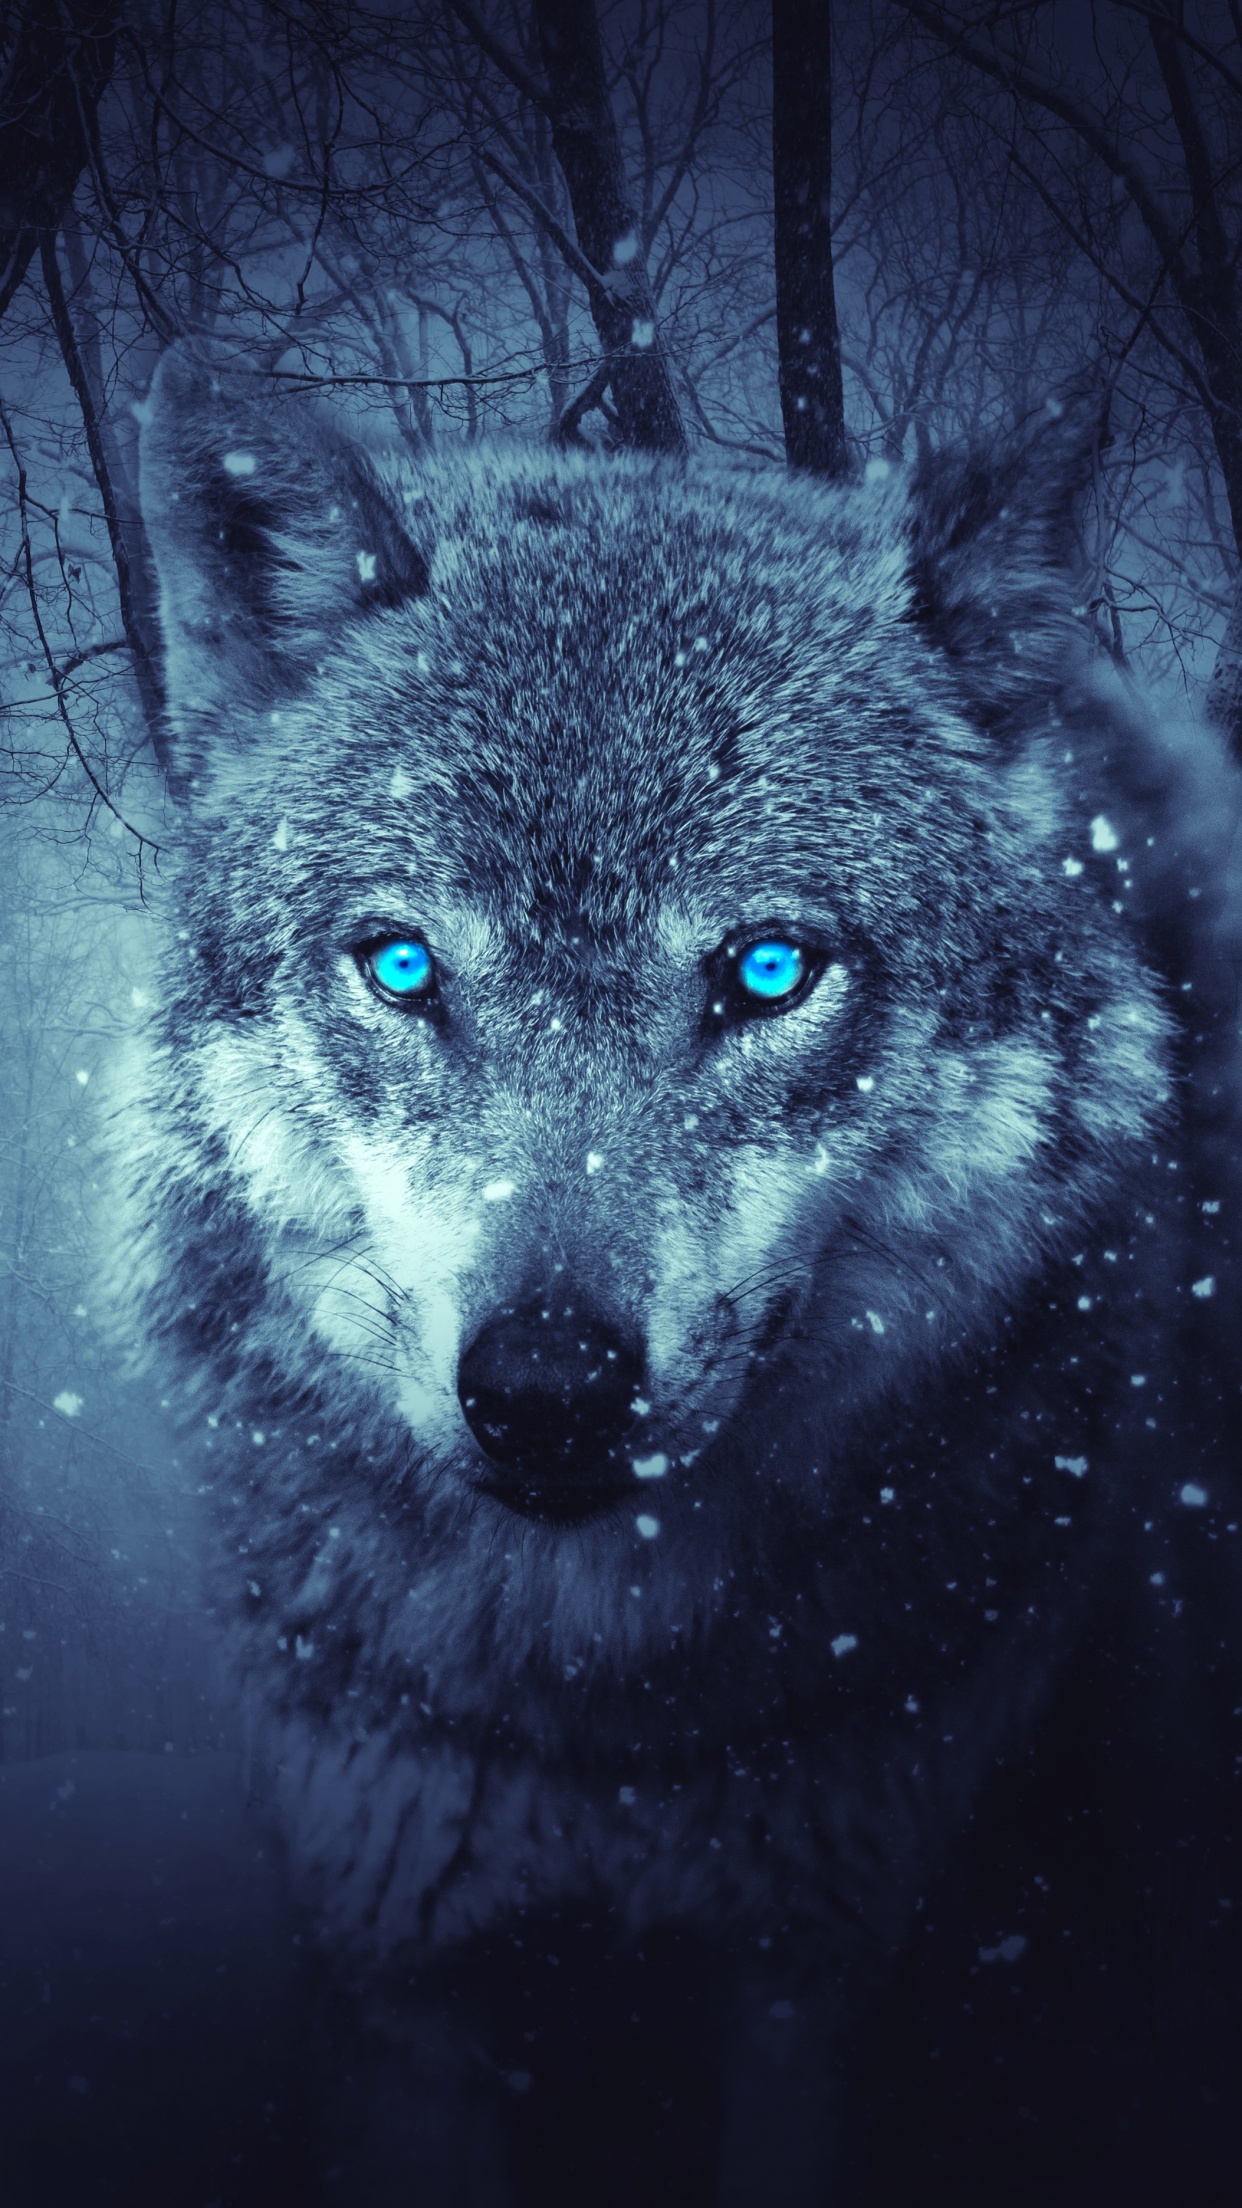 Wolf 4K Wallpaper, Blue eyes, Snowfall, Winter, Night, Forest, 5K